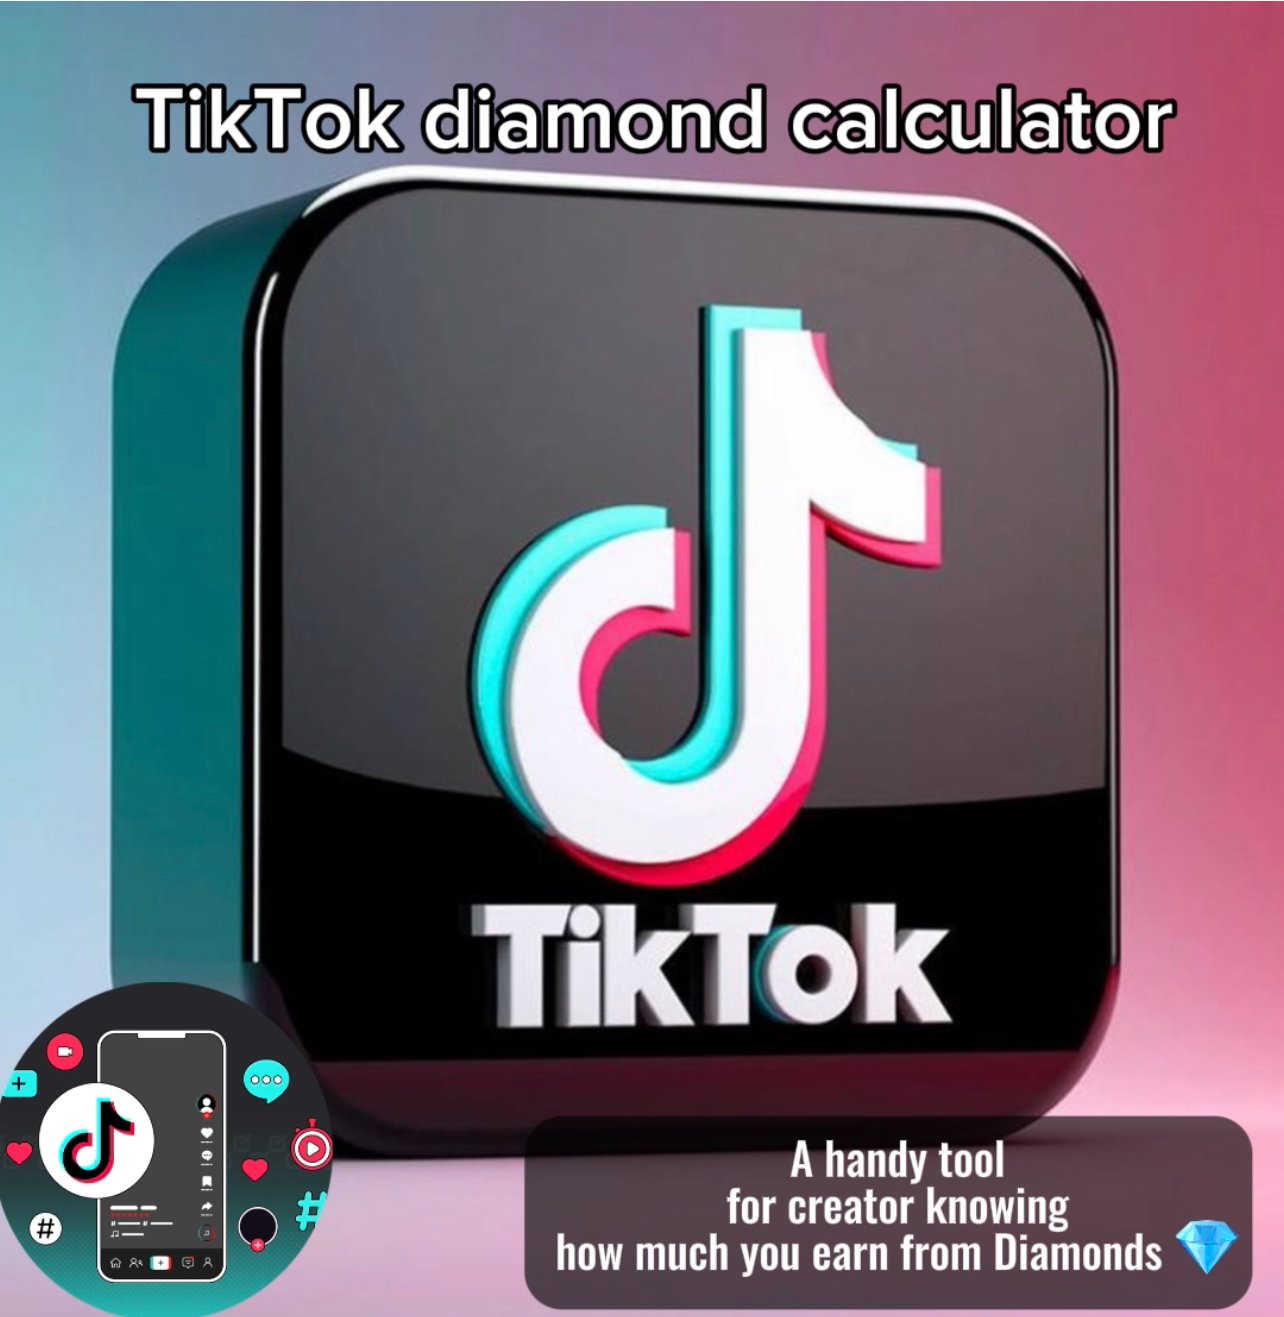 tiktok diamond calculator